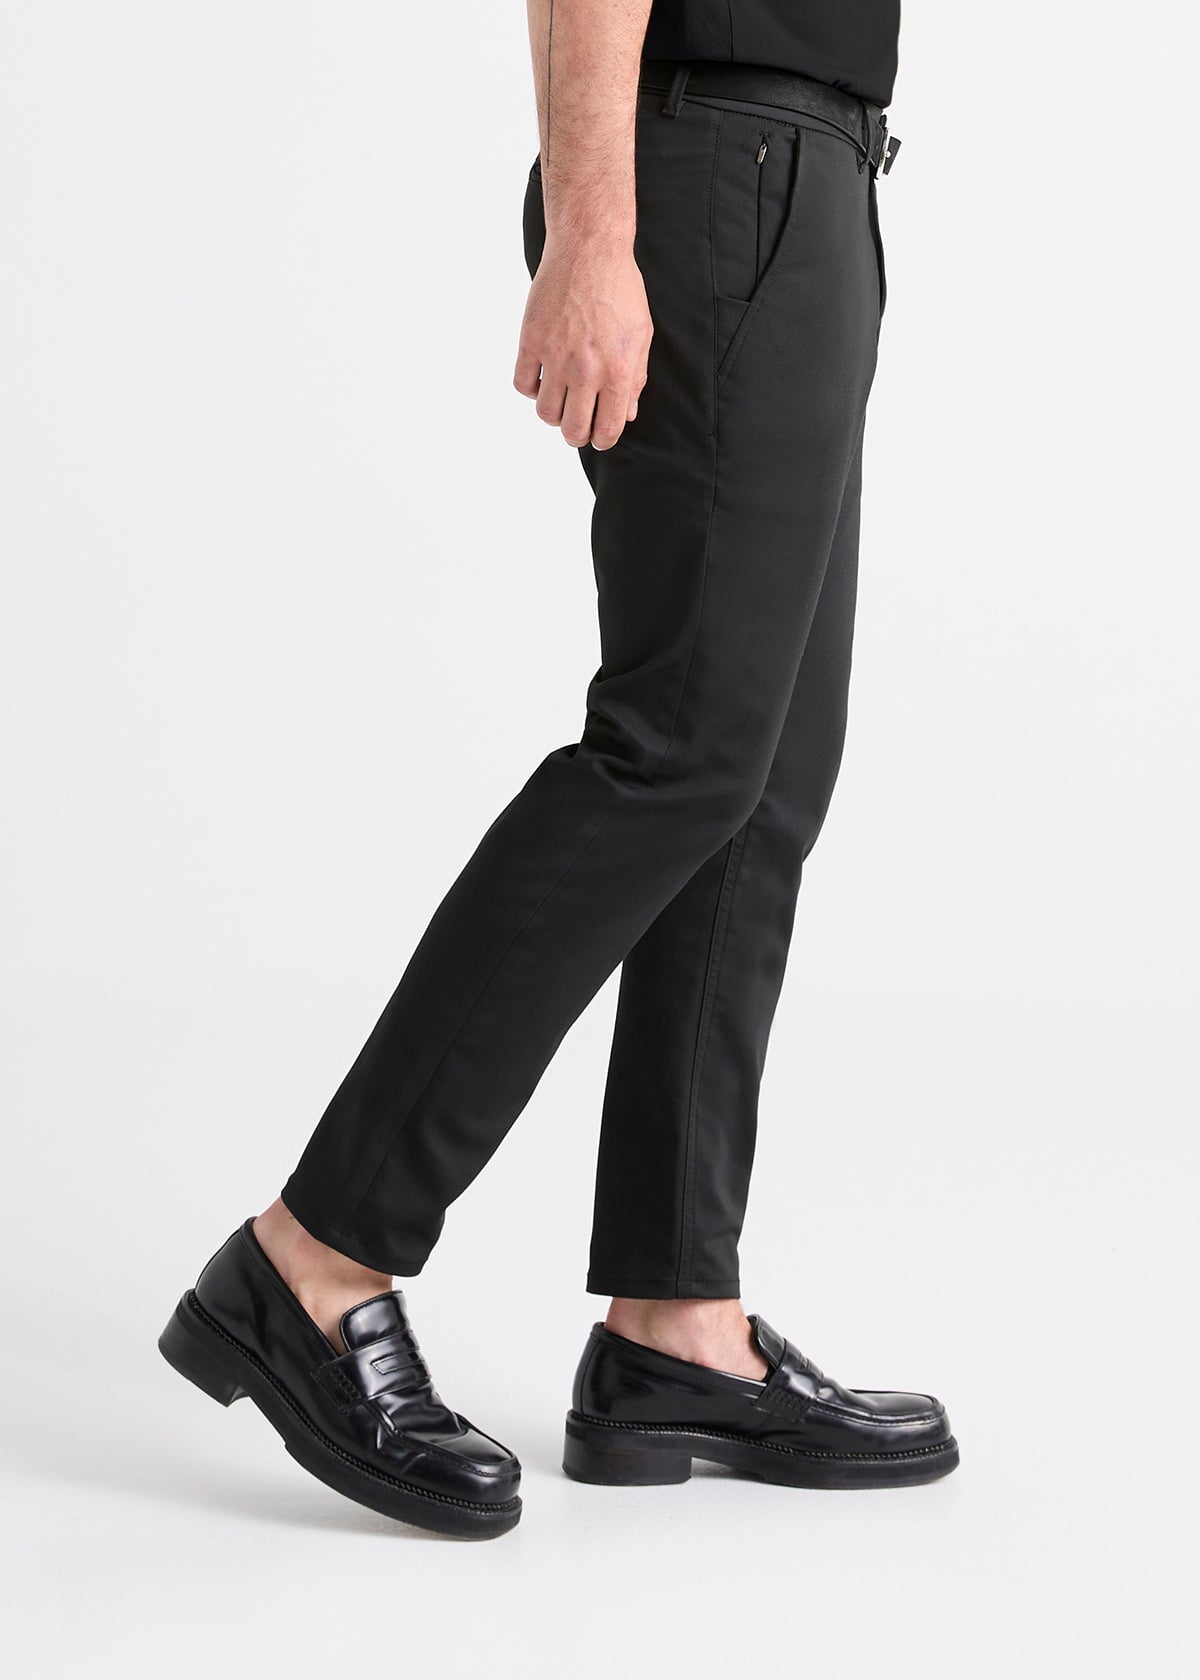 Men's Black Slim Fit Stretch Dress Pant Side